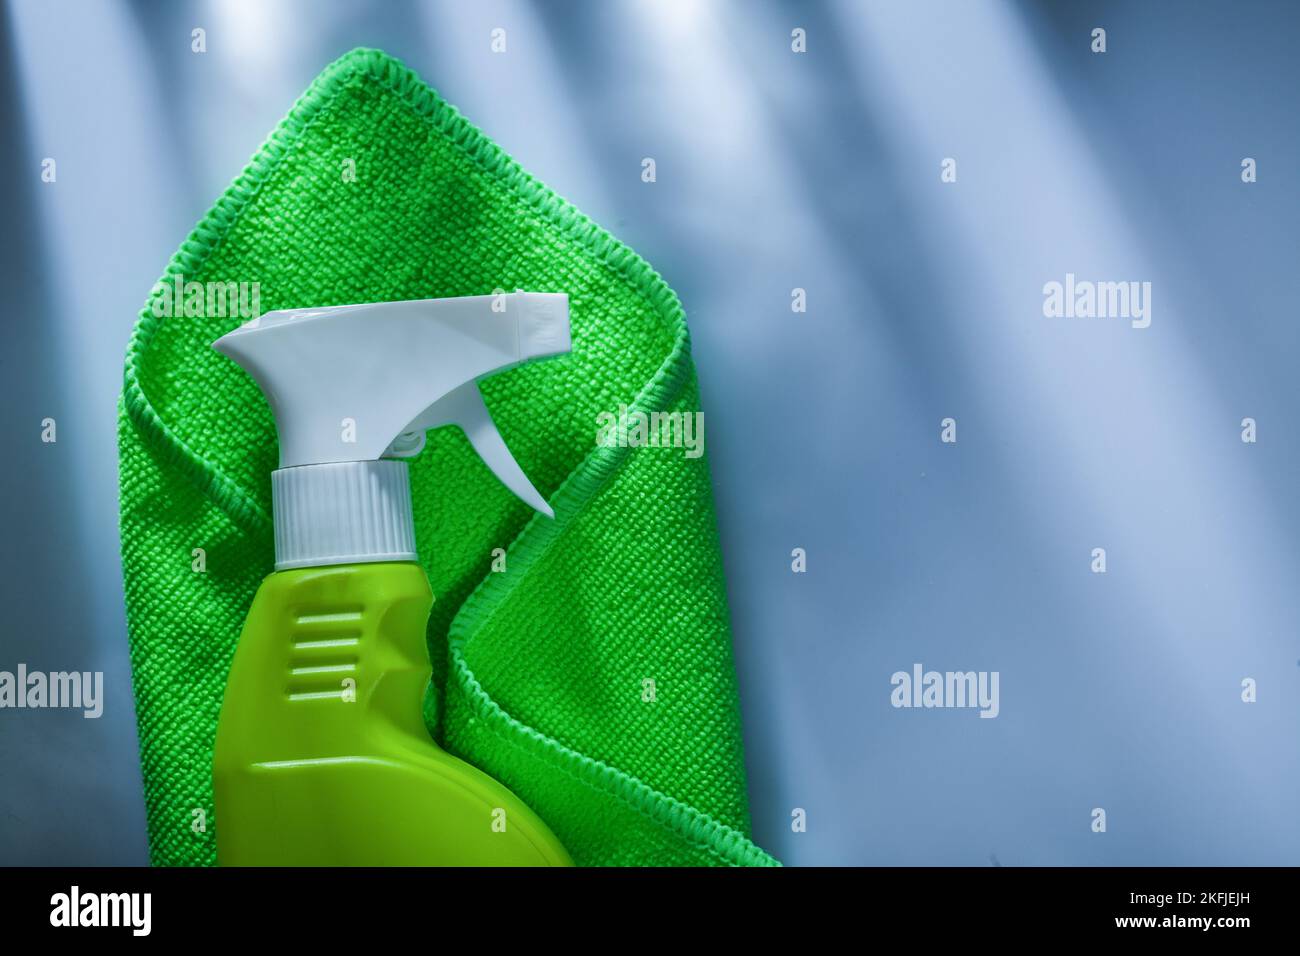 Green washing rag sprayer on white surface. Stock Photo